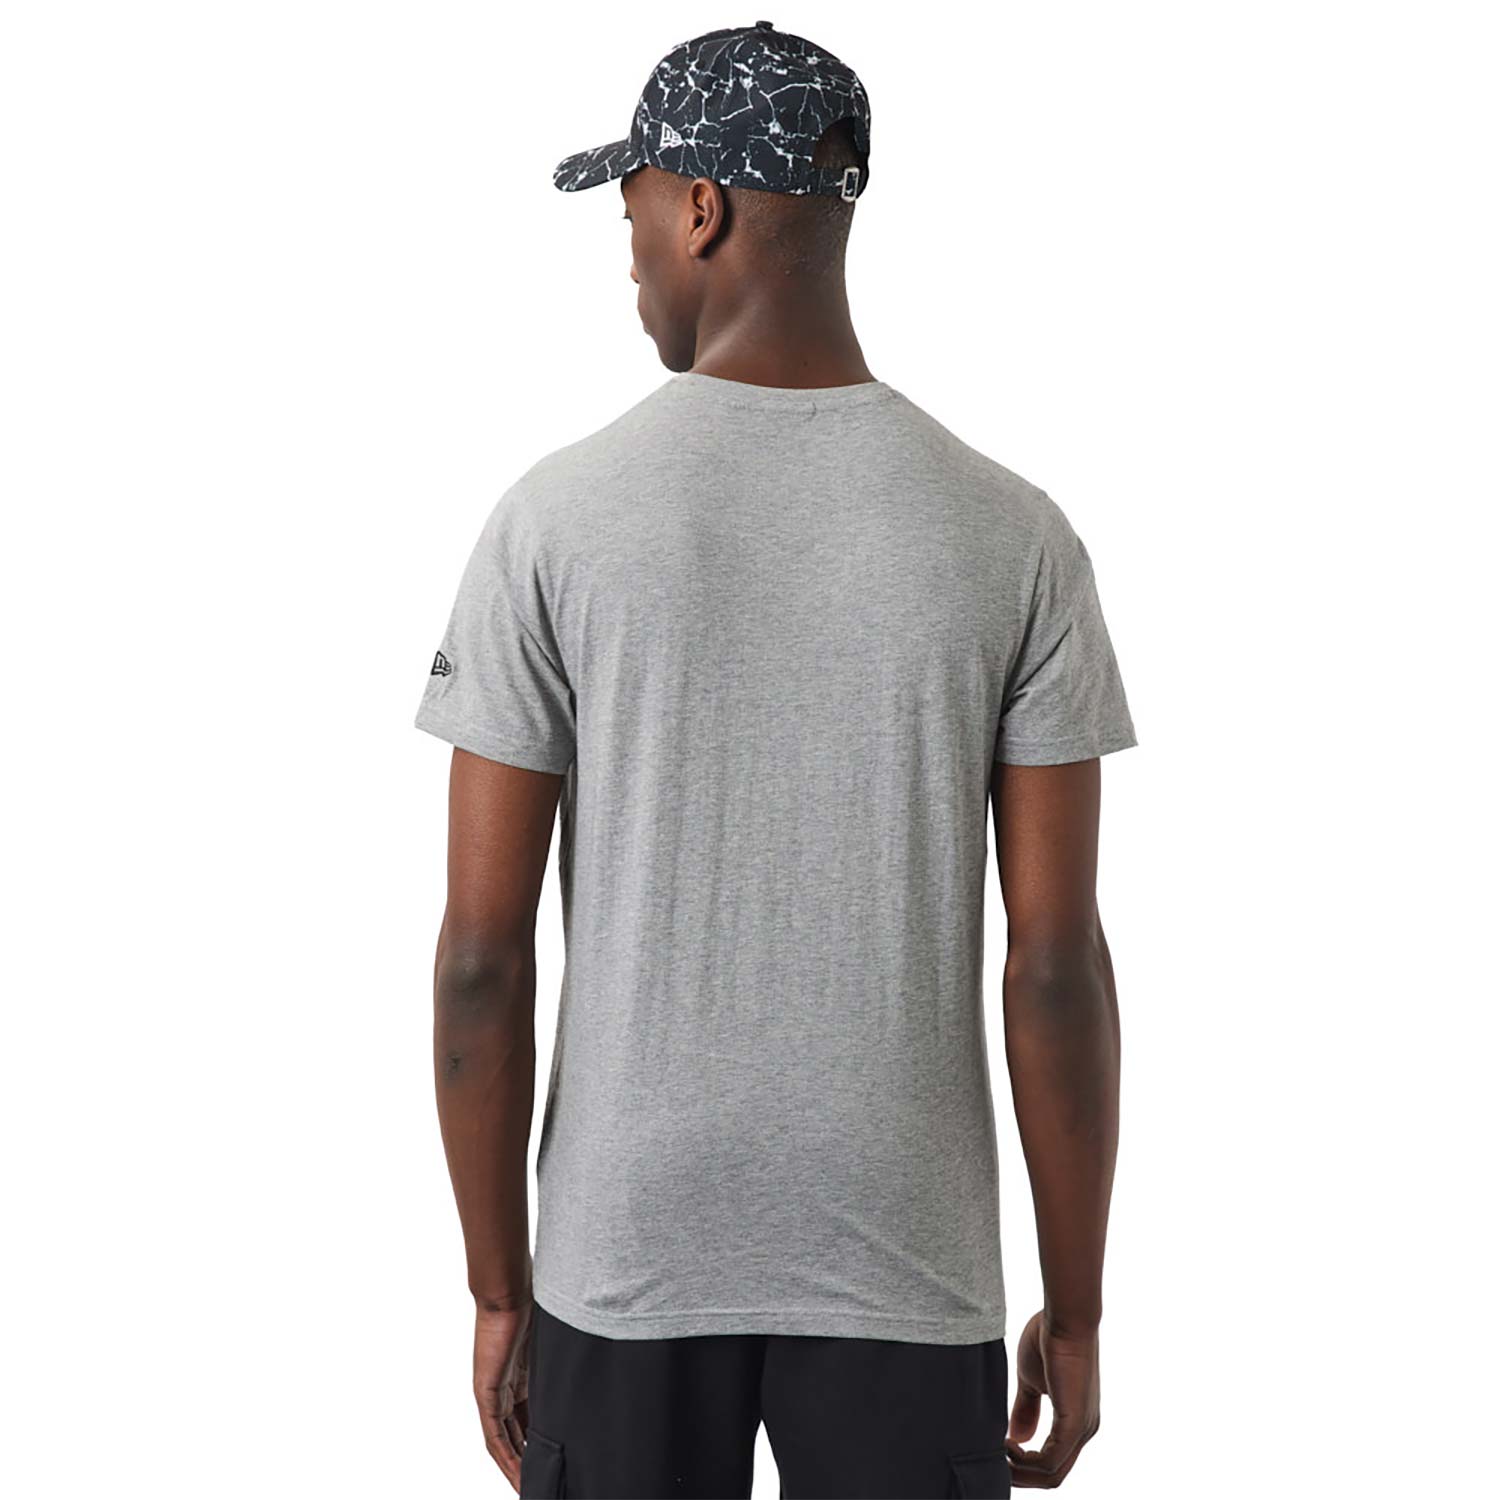 New York Yankees Logo Infill Grey T-Shirt